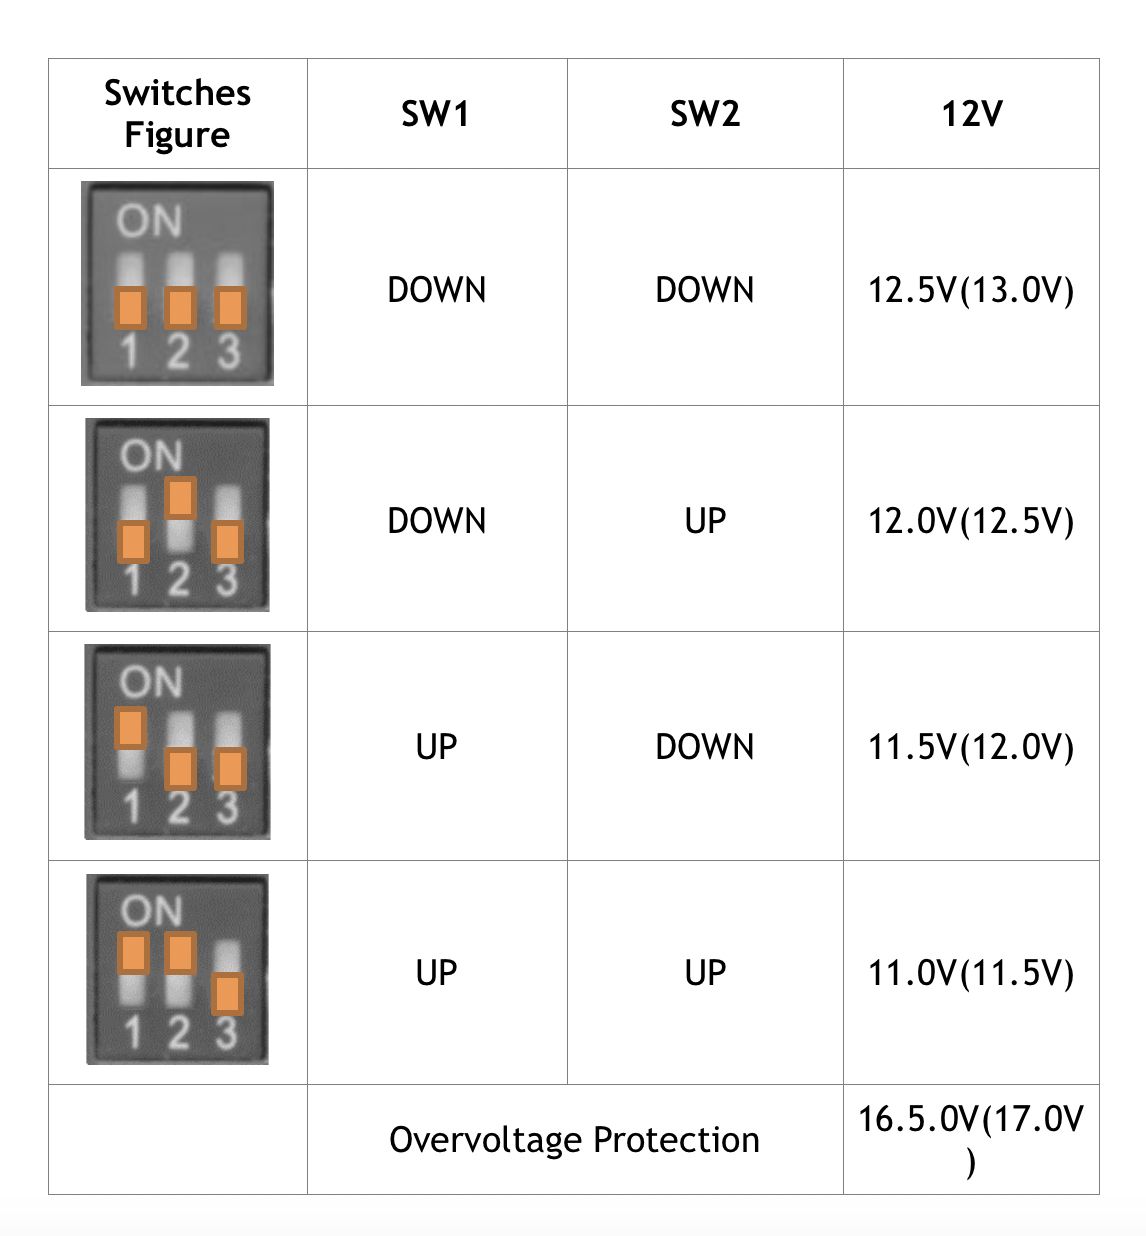 高/低保護電壓設定 SW1 SW2